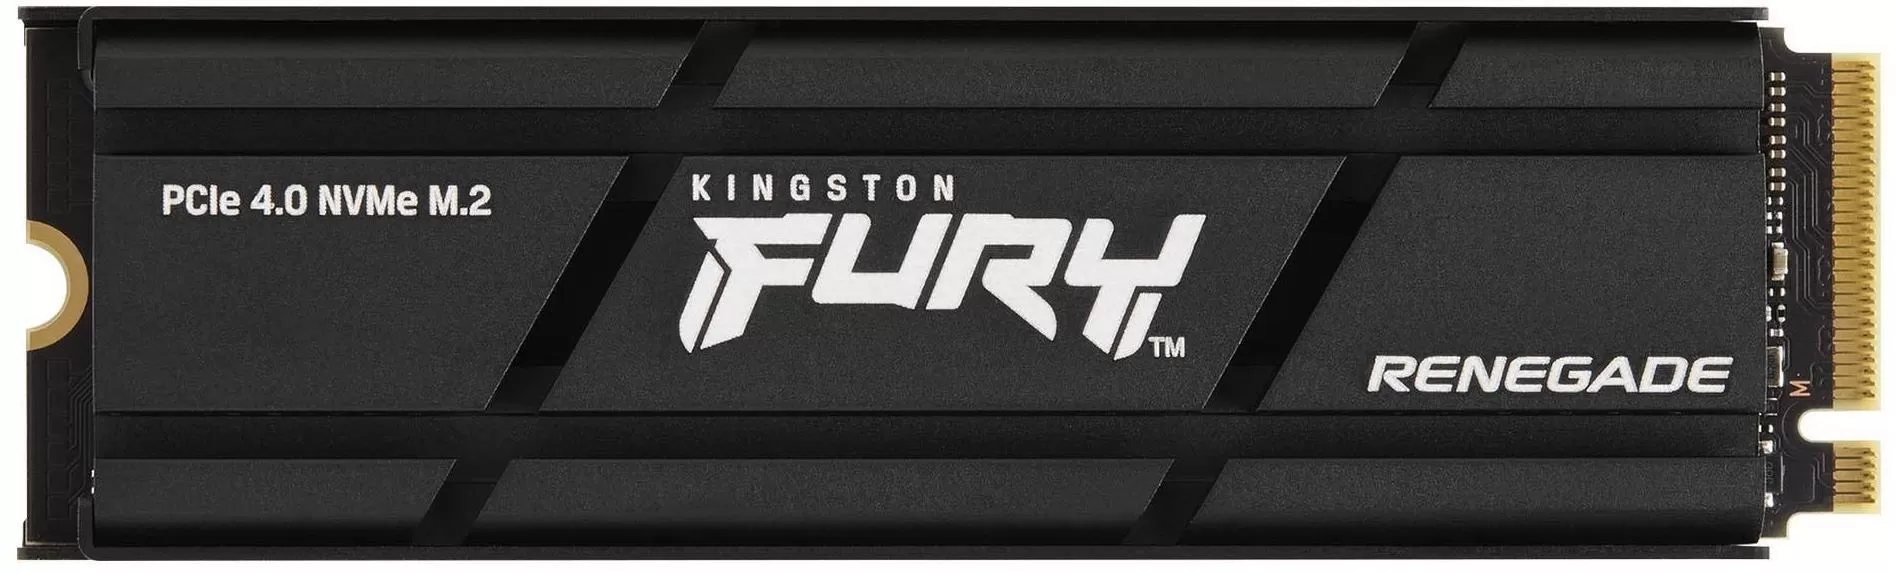 אחסון פנימי Kingston FURY Renegade PCIe 4.0 NVMe M.2 SSD 1TB